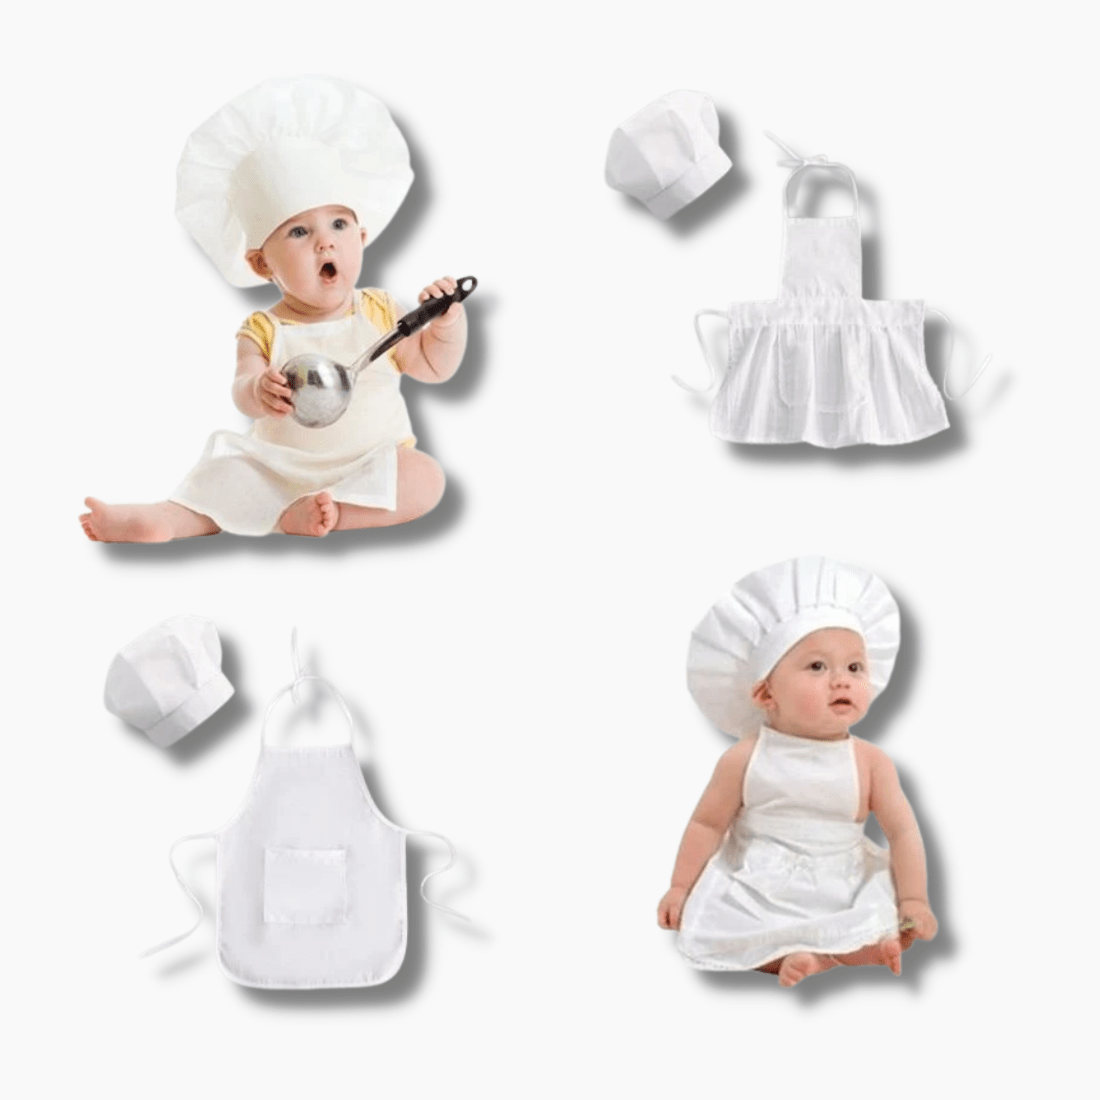 Boy's Clothing Baby Chef Costume